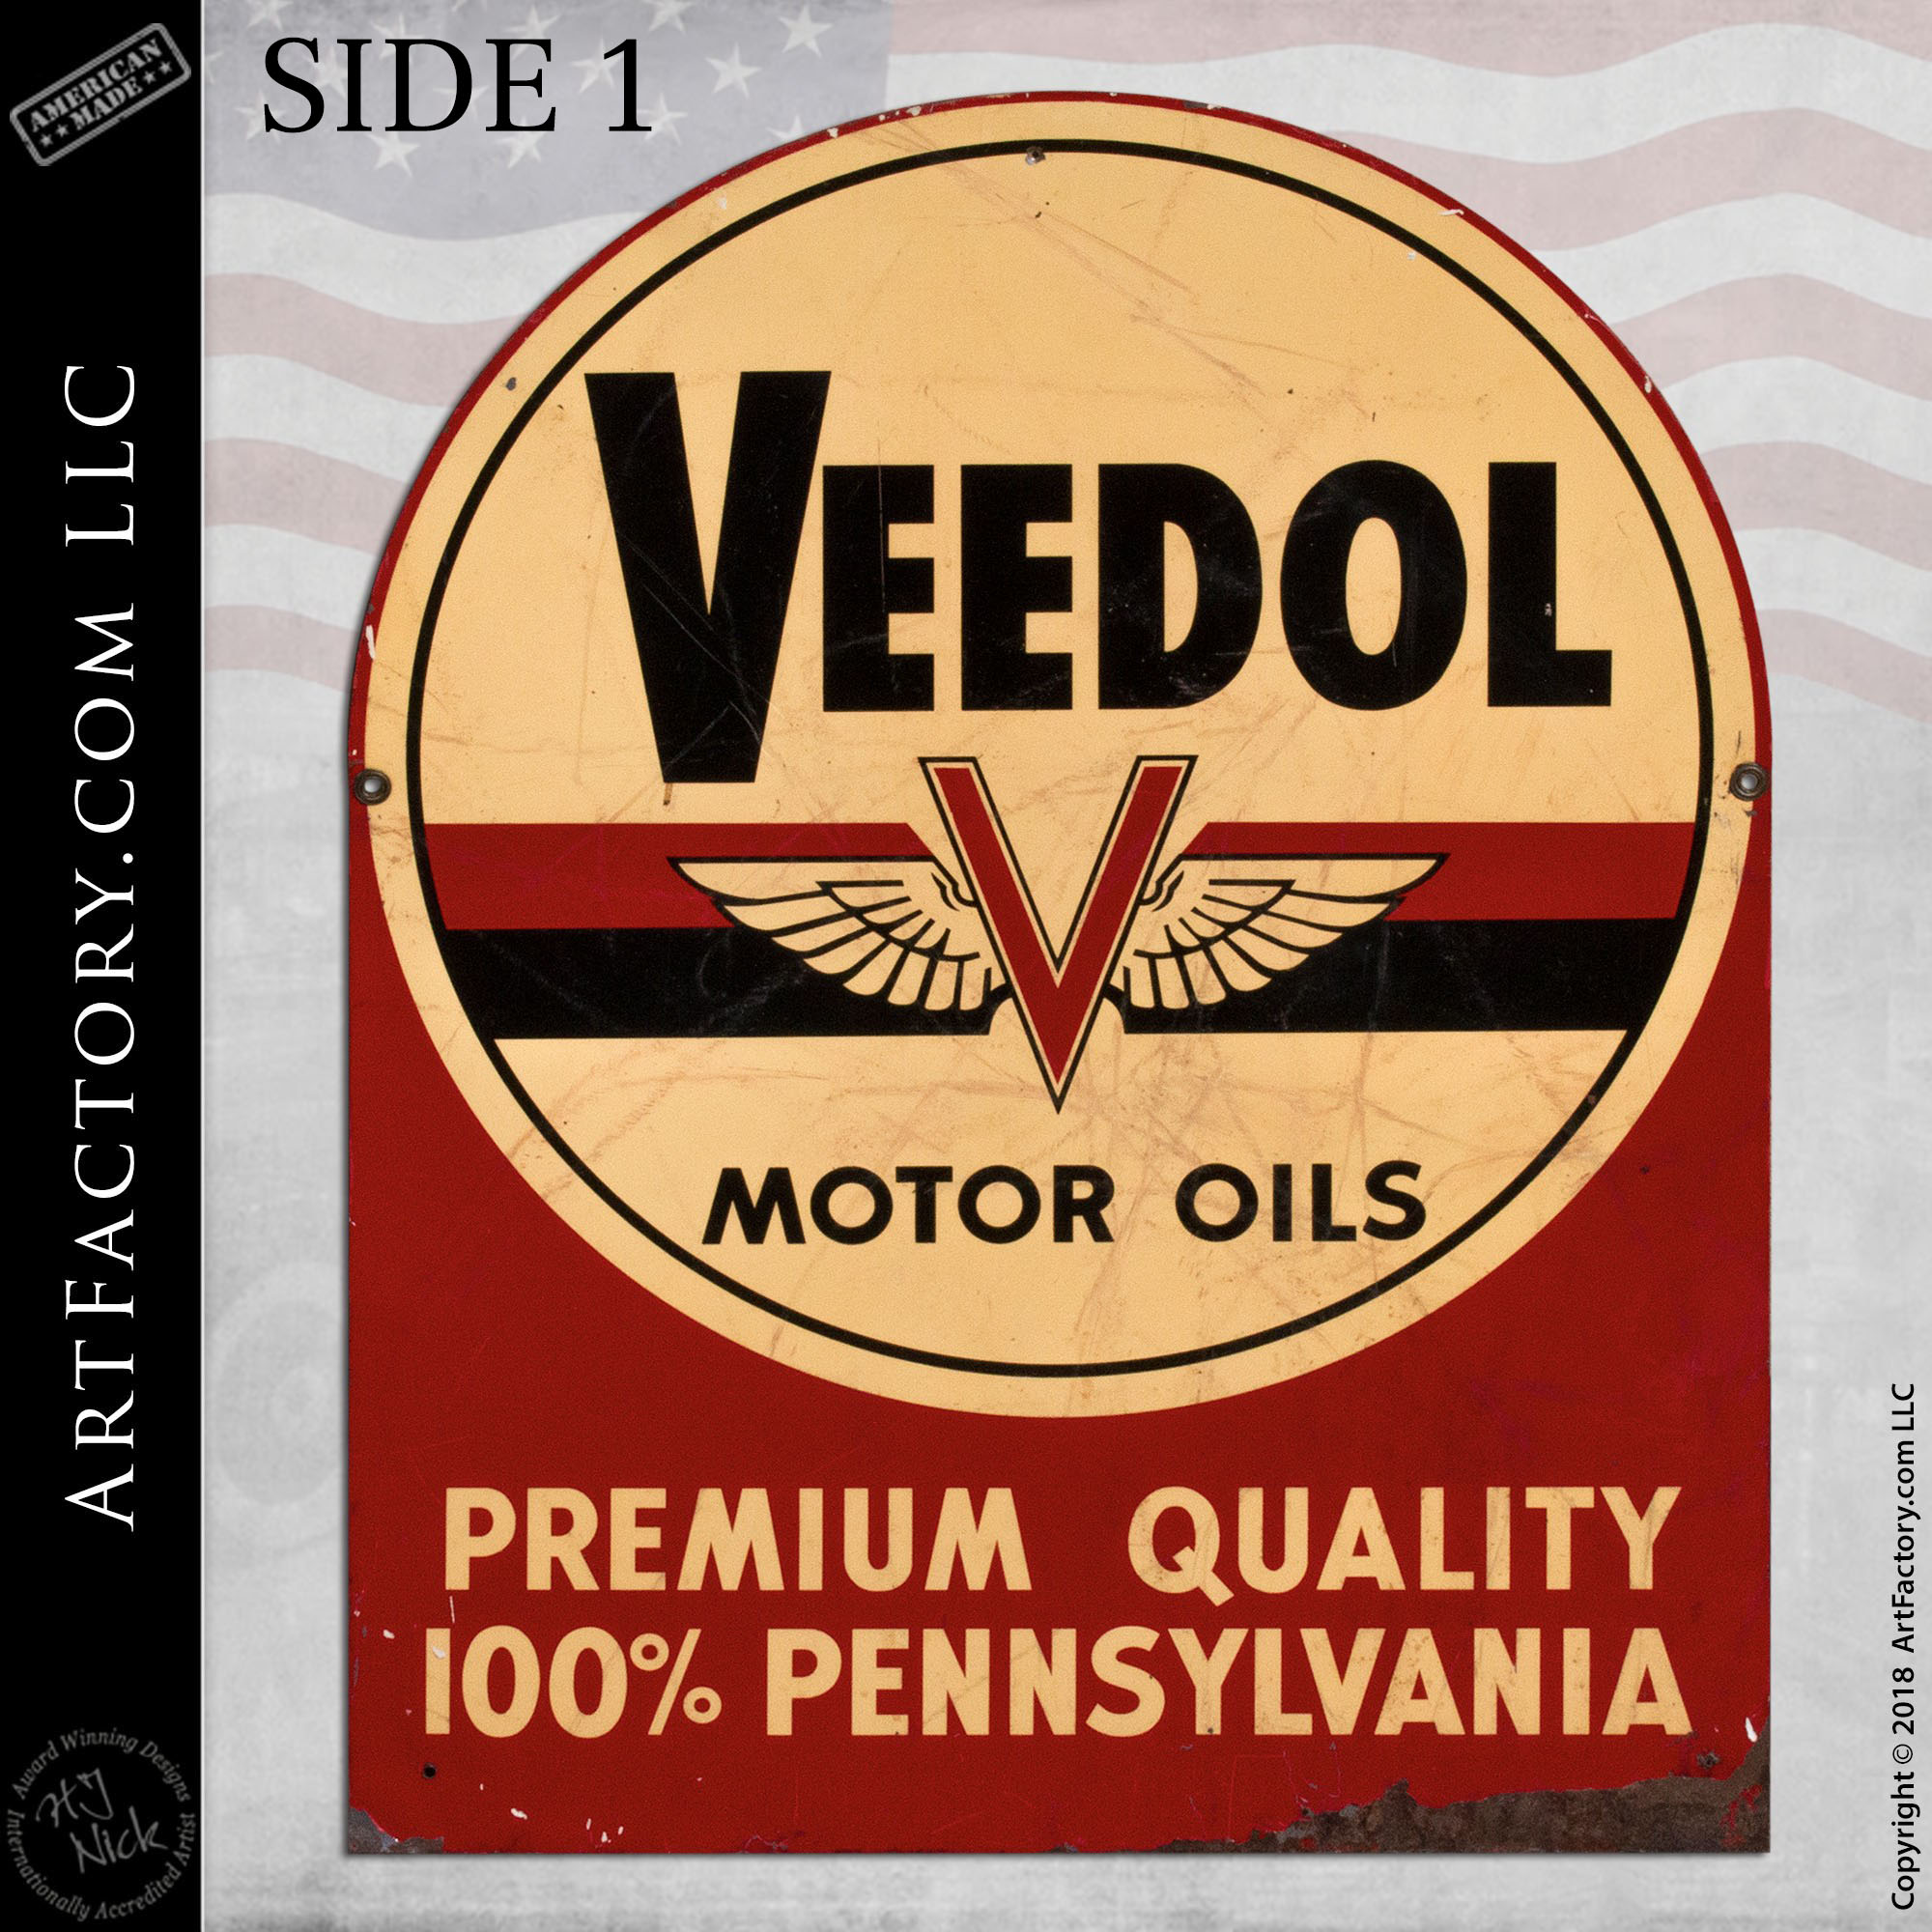 Veedol Motor Oils Porcelain Look 10" X 7" Reproduction Metal Sign U102 